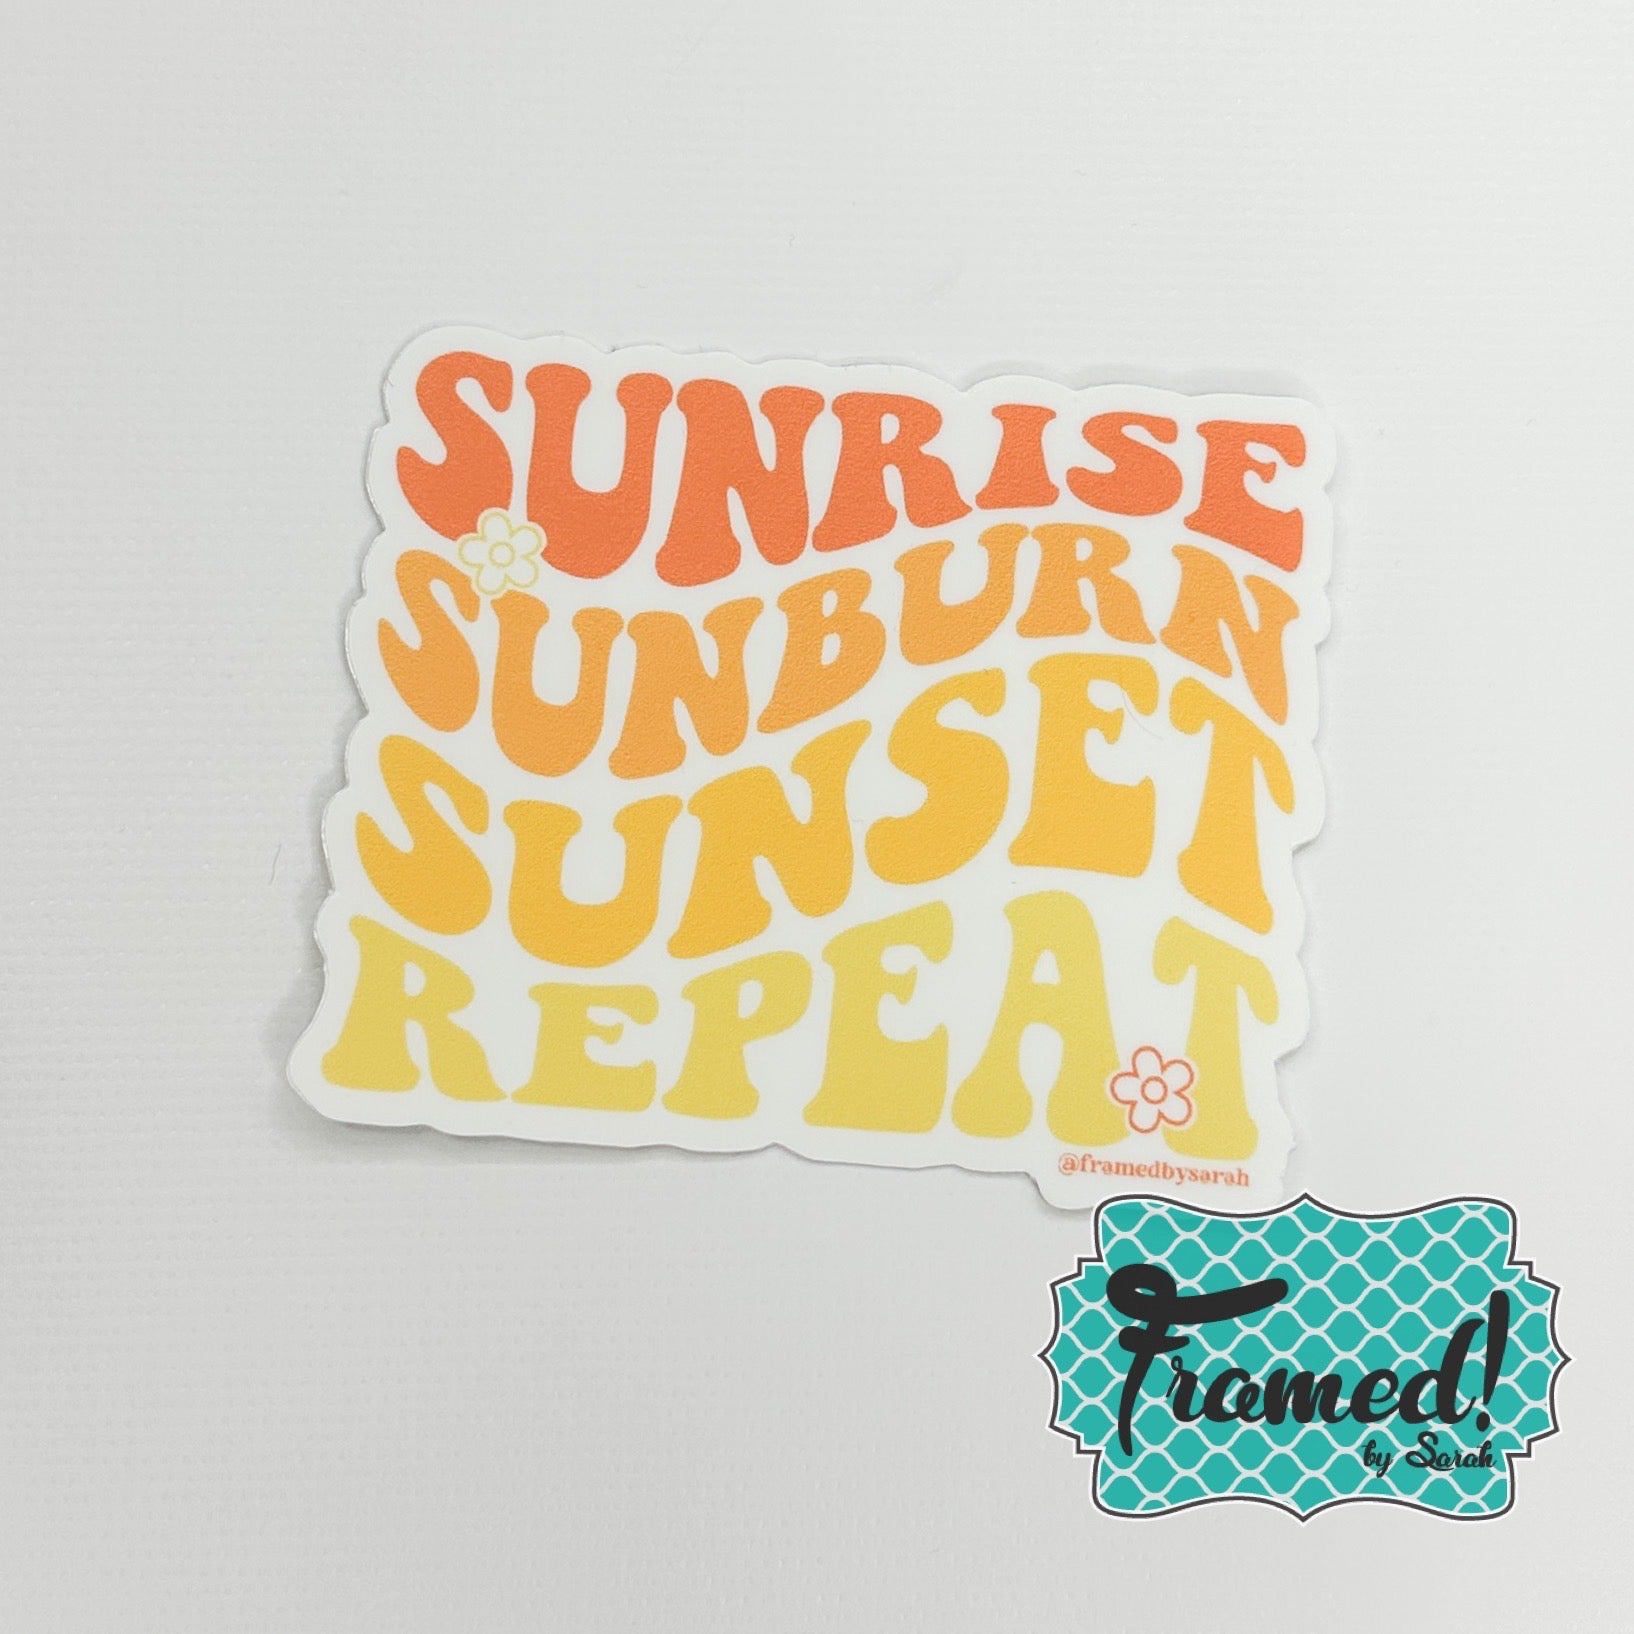 Sunrise Sunburn Sunset Repeat Sticker